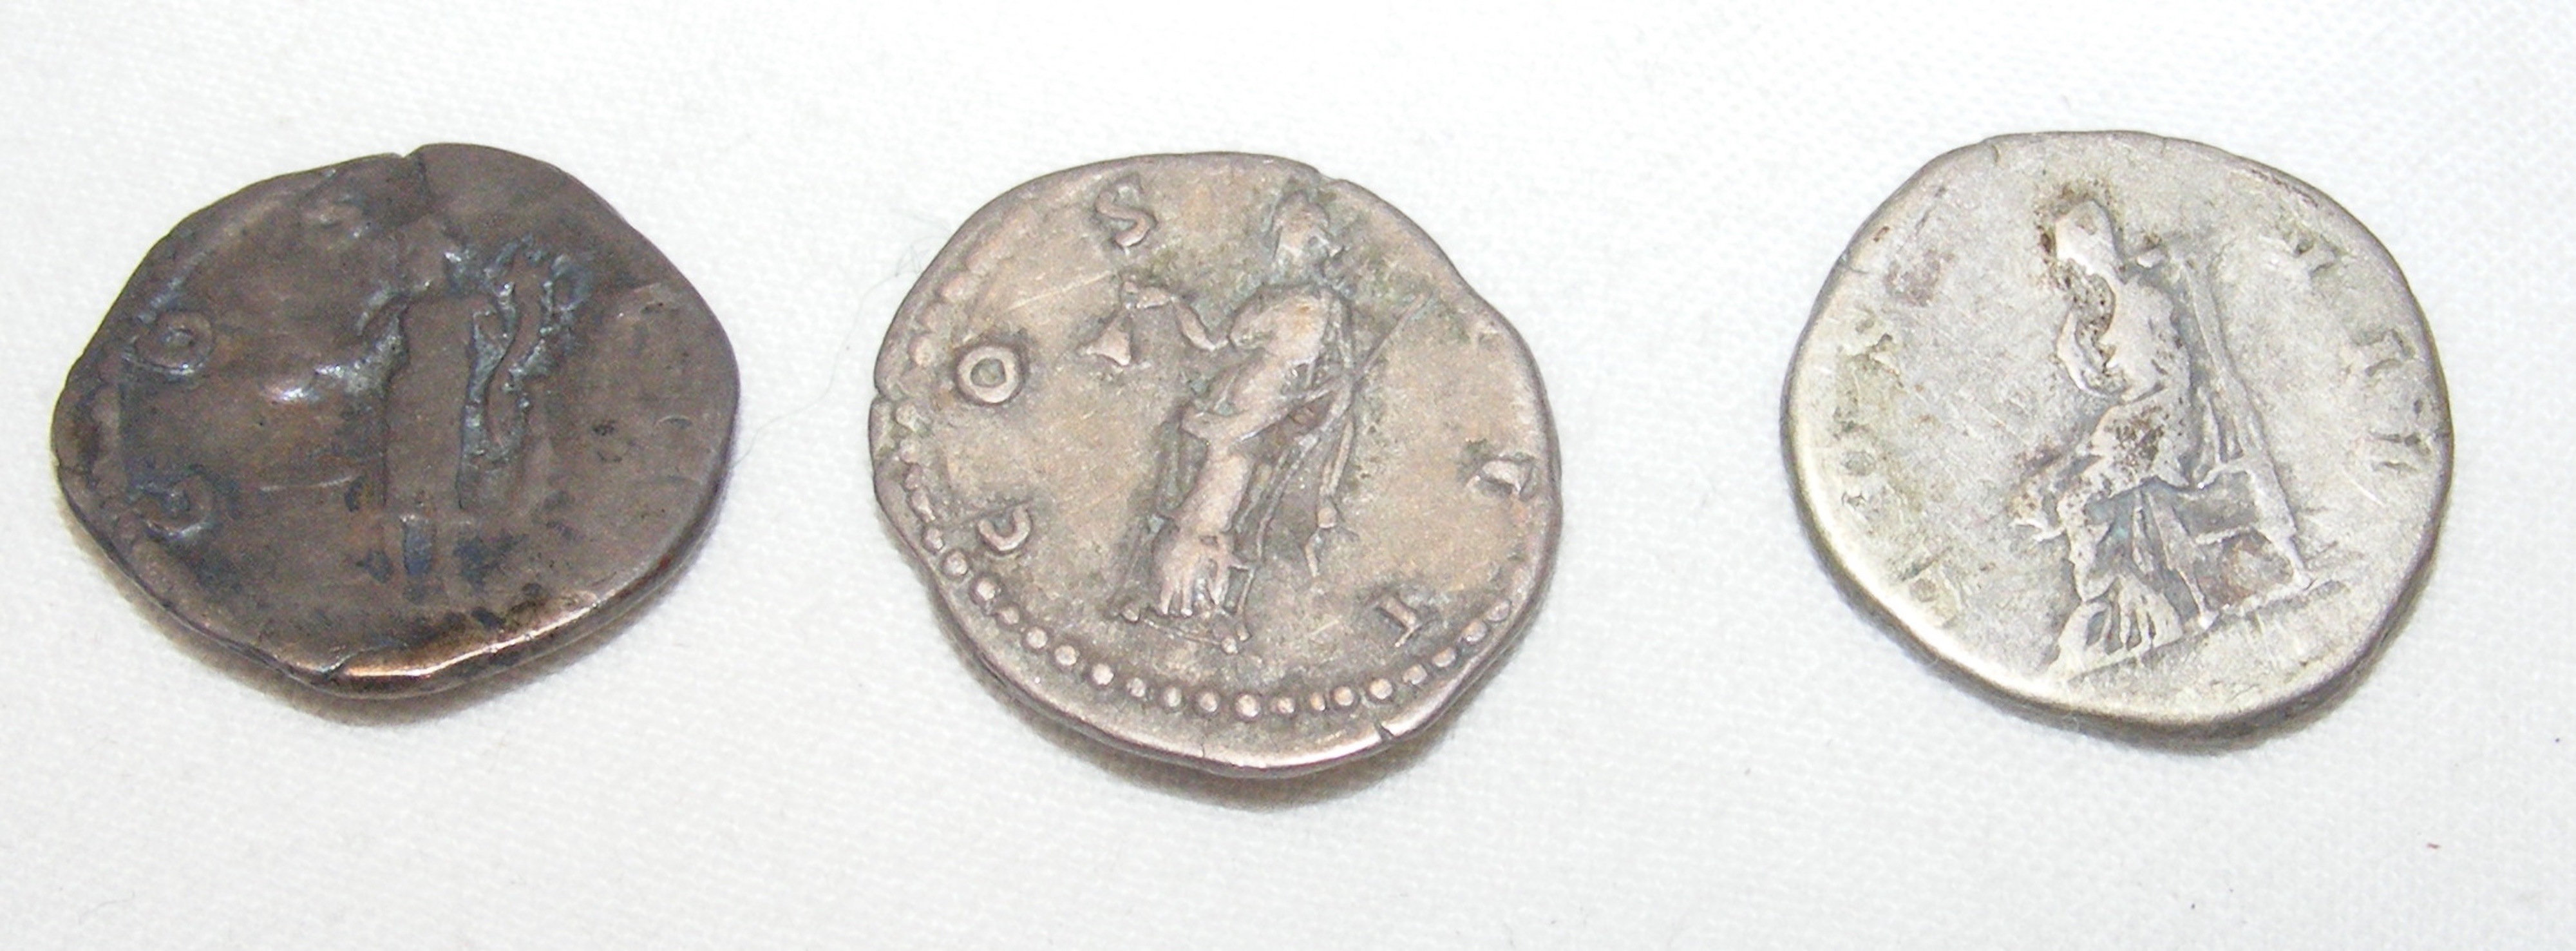 Three Roman silver coins, Hadrian (AD117-138) - 3. - Image 2 of 2